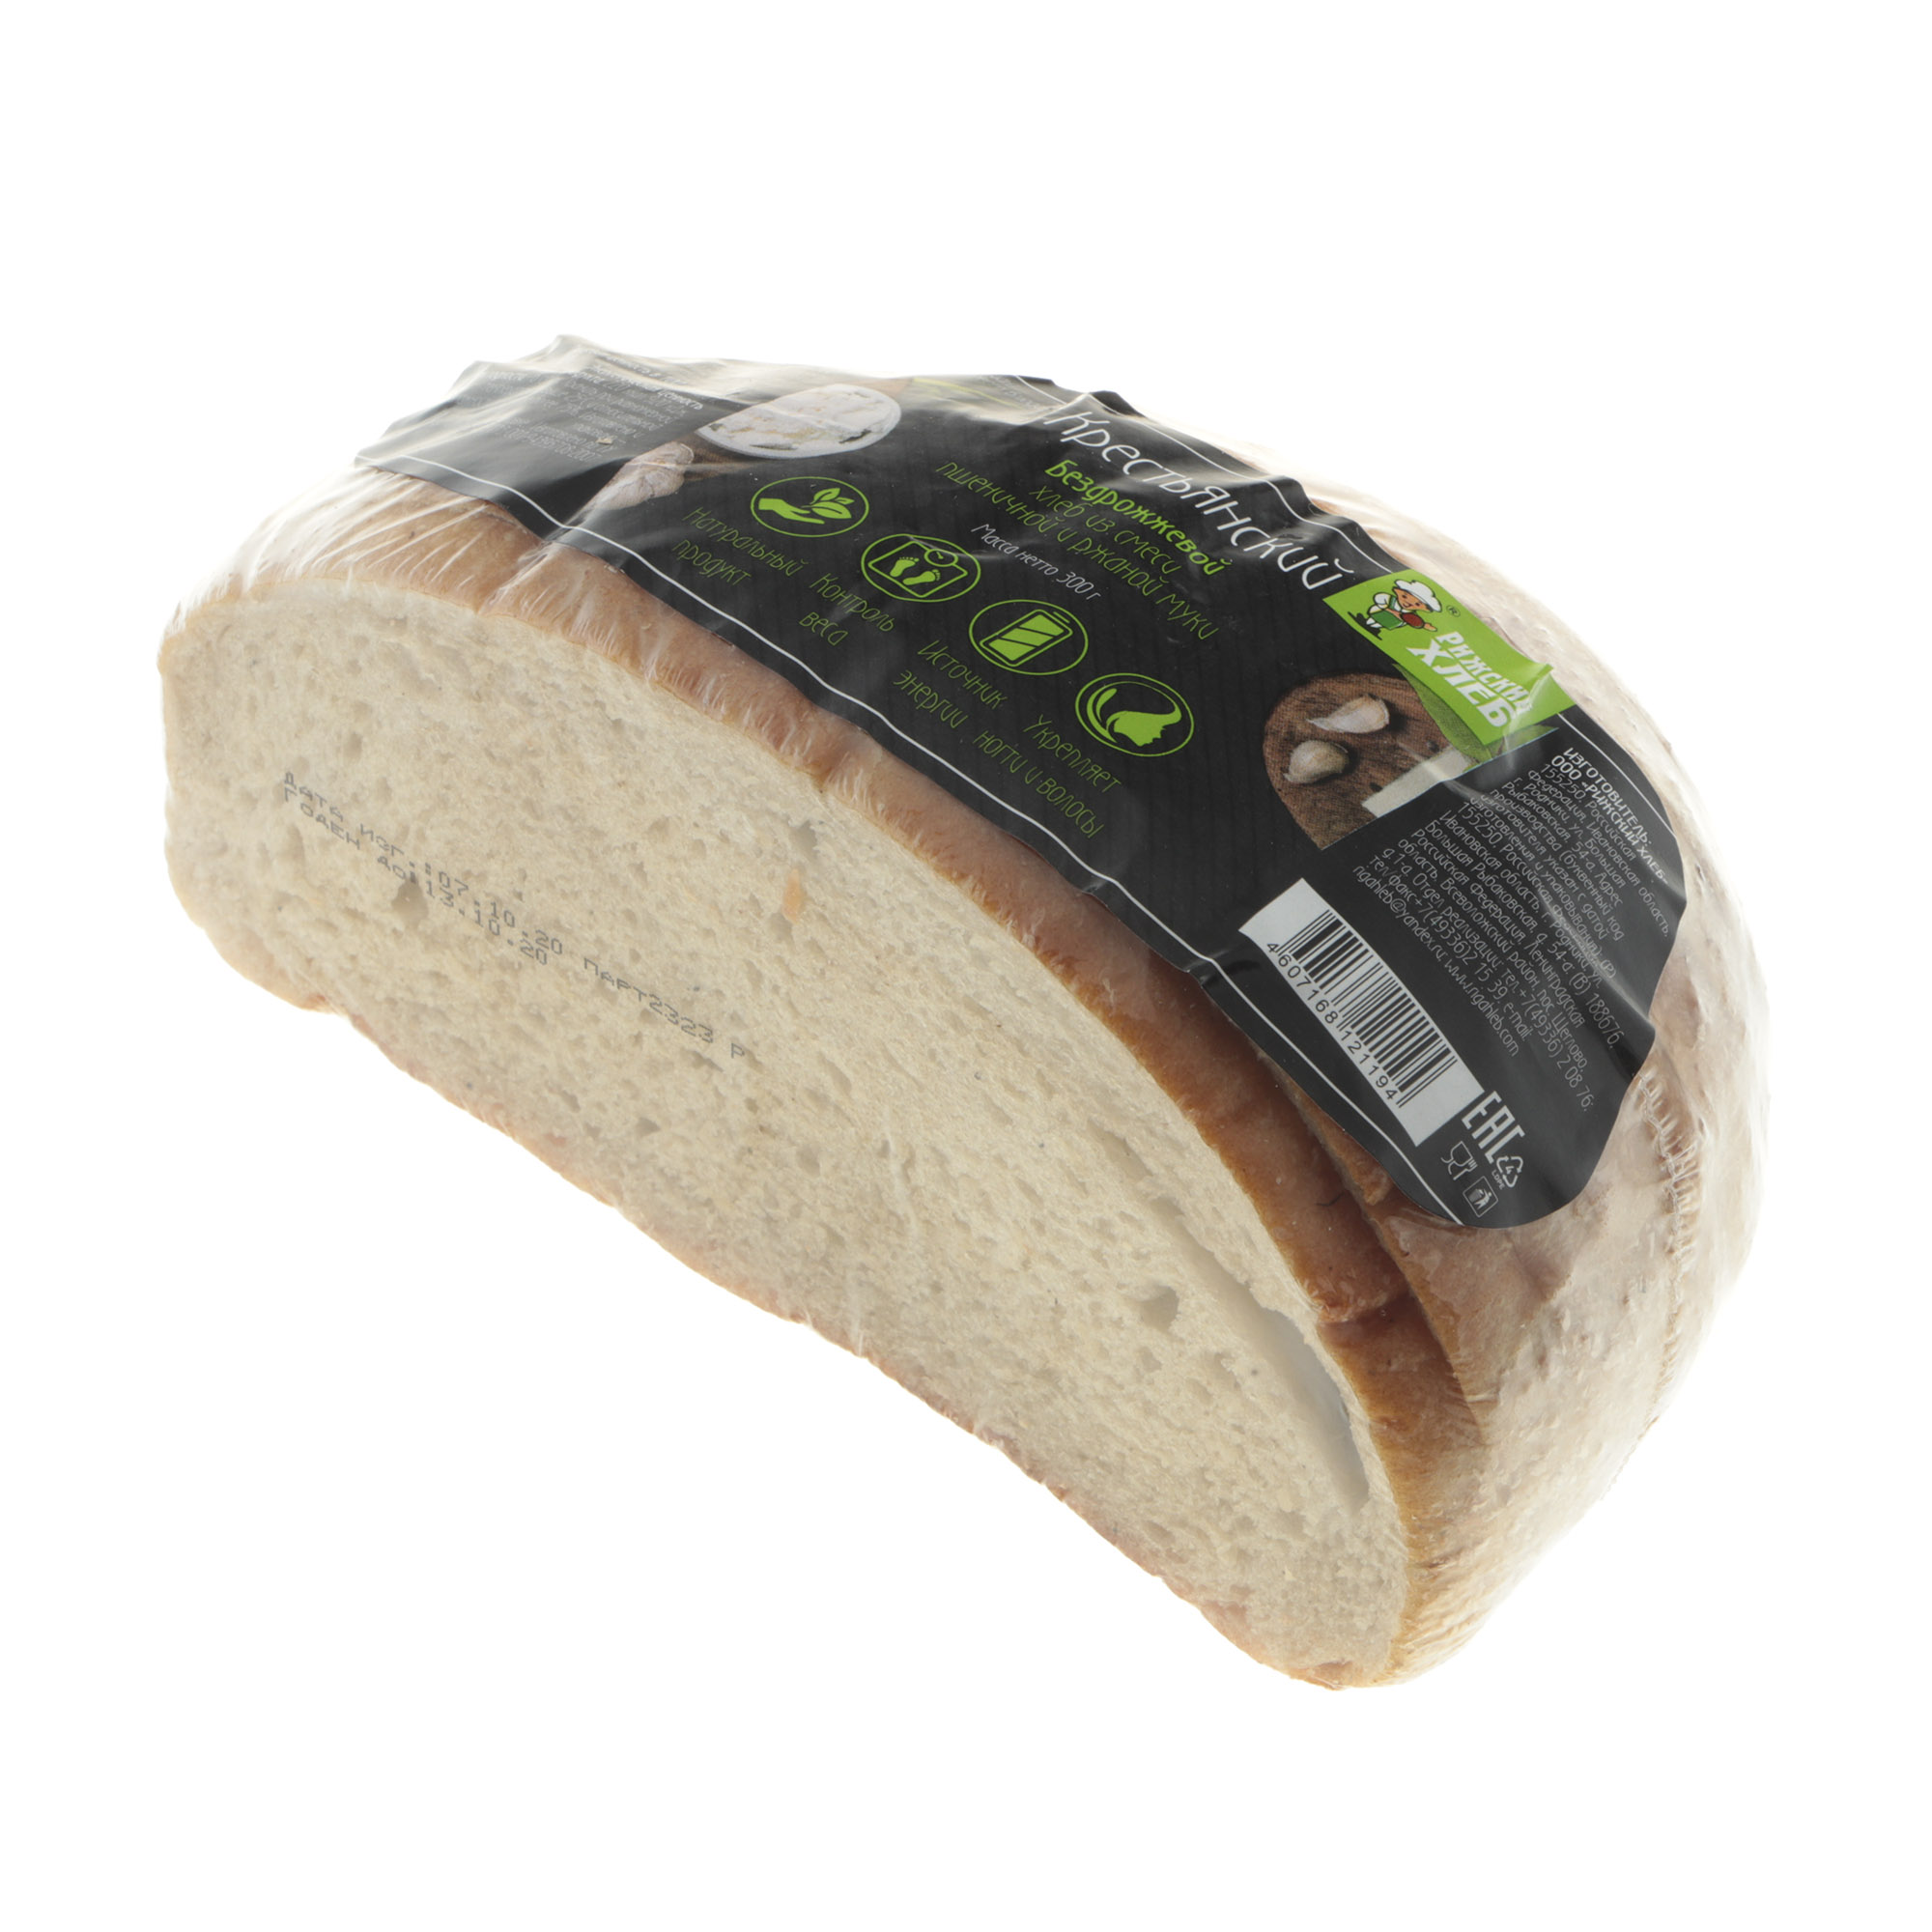 Хлеб Рижский хлеб крестьянский 300 г хлеб рижский хлеб крестьянский со злаками бездрожжевой 300 г